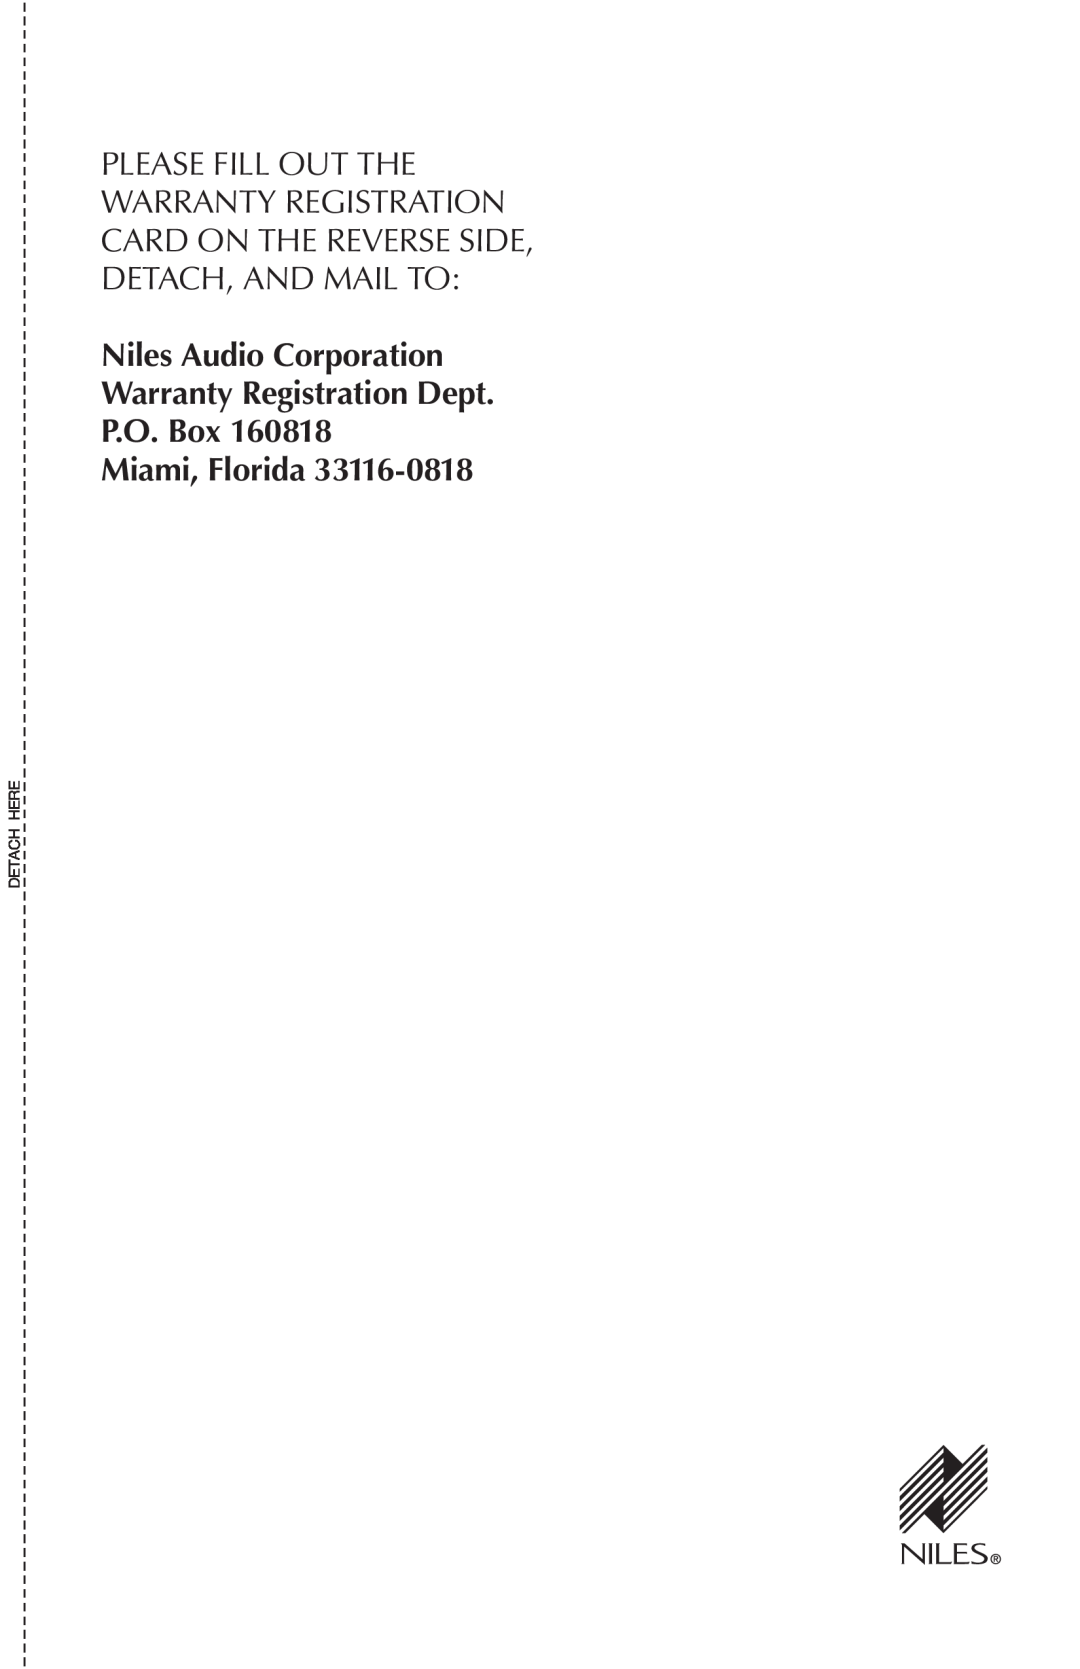 Niles Audio RS8Si Sandstone Niles Audio Corporation, Warranty Registration Dept P.O. Box, Miami, Florida, Detach Here 